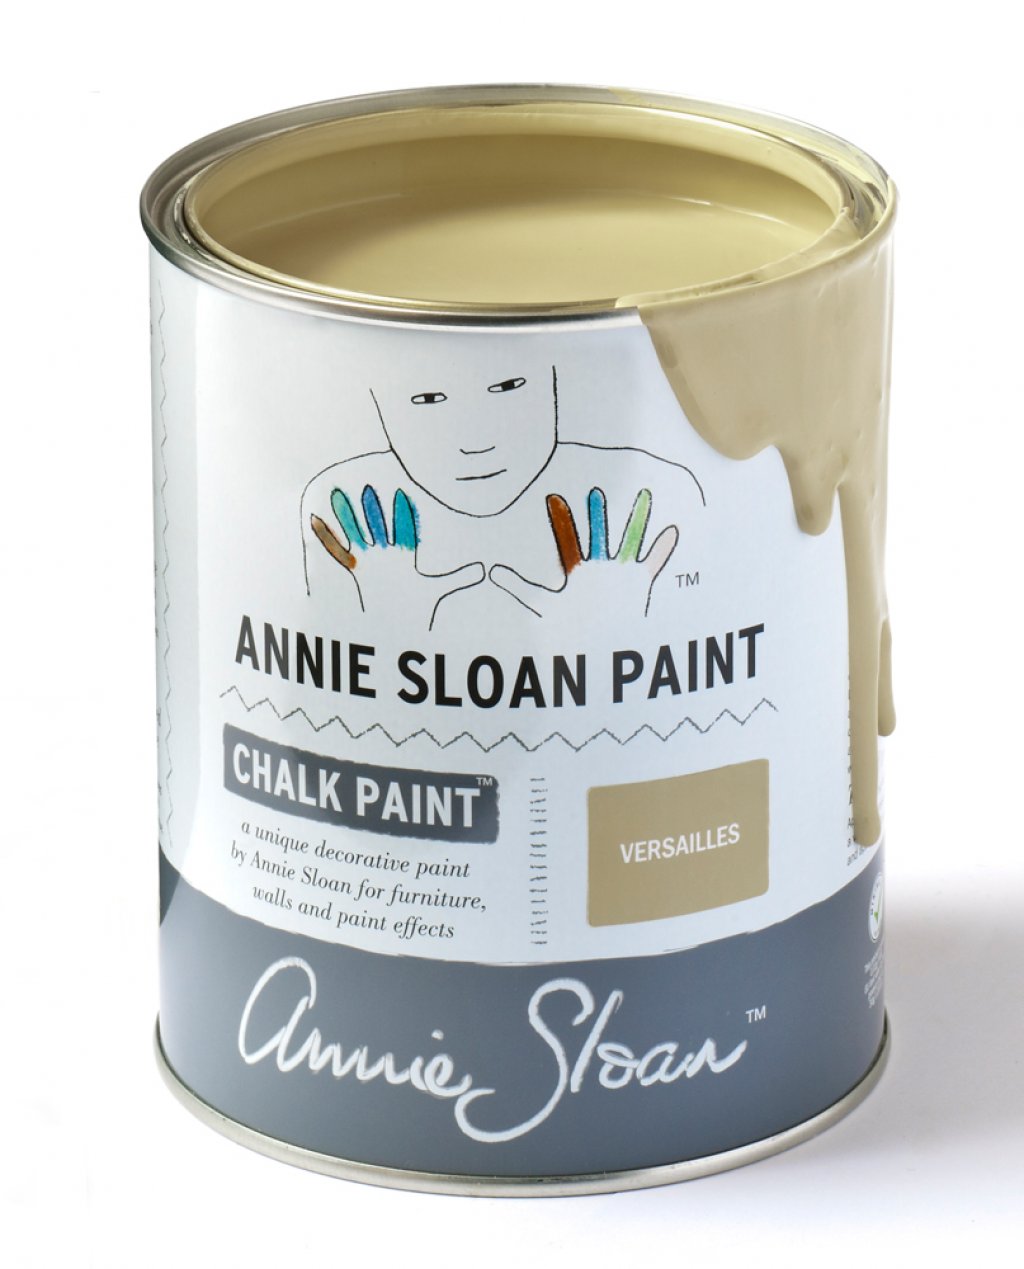 Annie Sloan Chalk Paint - Versailles